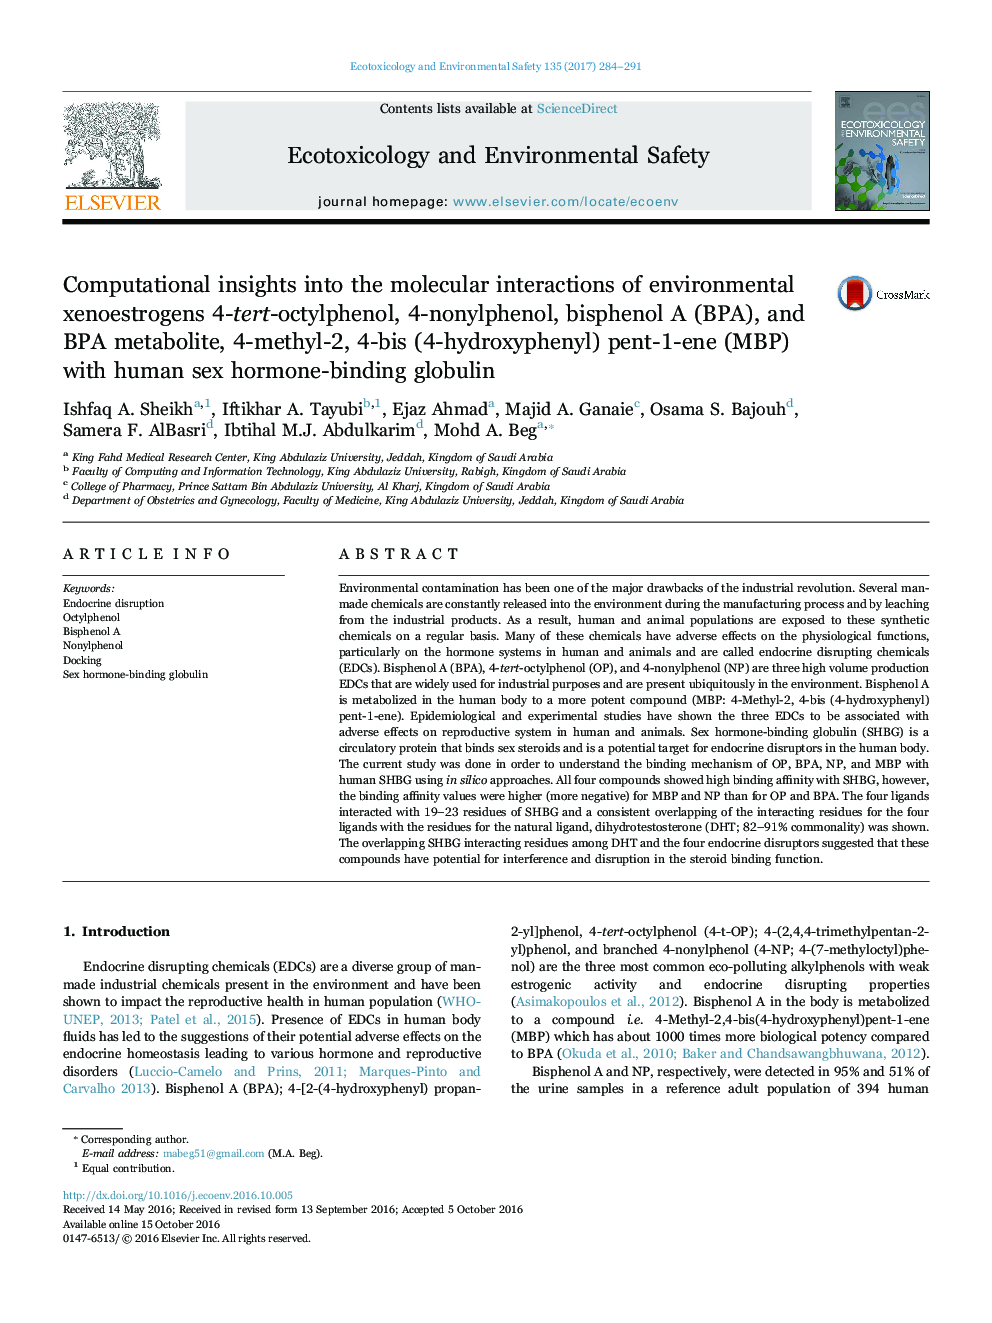 Computational insights into the molecular interactions of environmental xenoestrogens 4-tert-octylphenol, 4-nonylphenol, bisphenol A (BPA), and BPA metabolite, 4-methyl-2, 4-bis (4-hydroxyphenyl) pent-1-ene (MBP) with human sex hormone-binding globulin